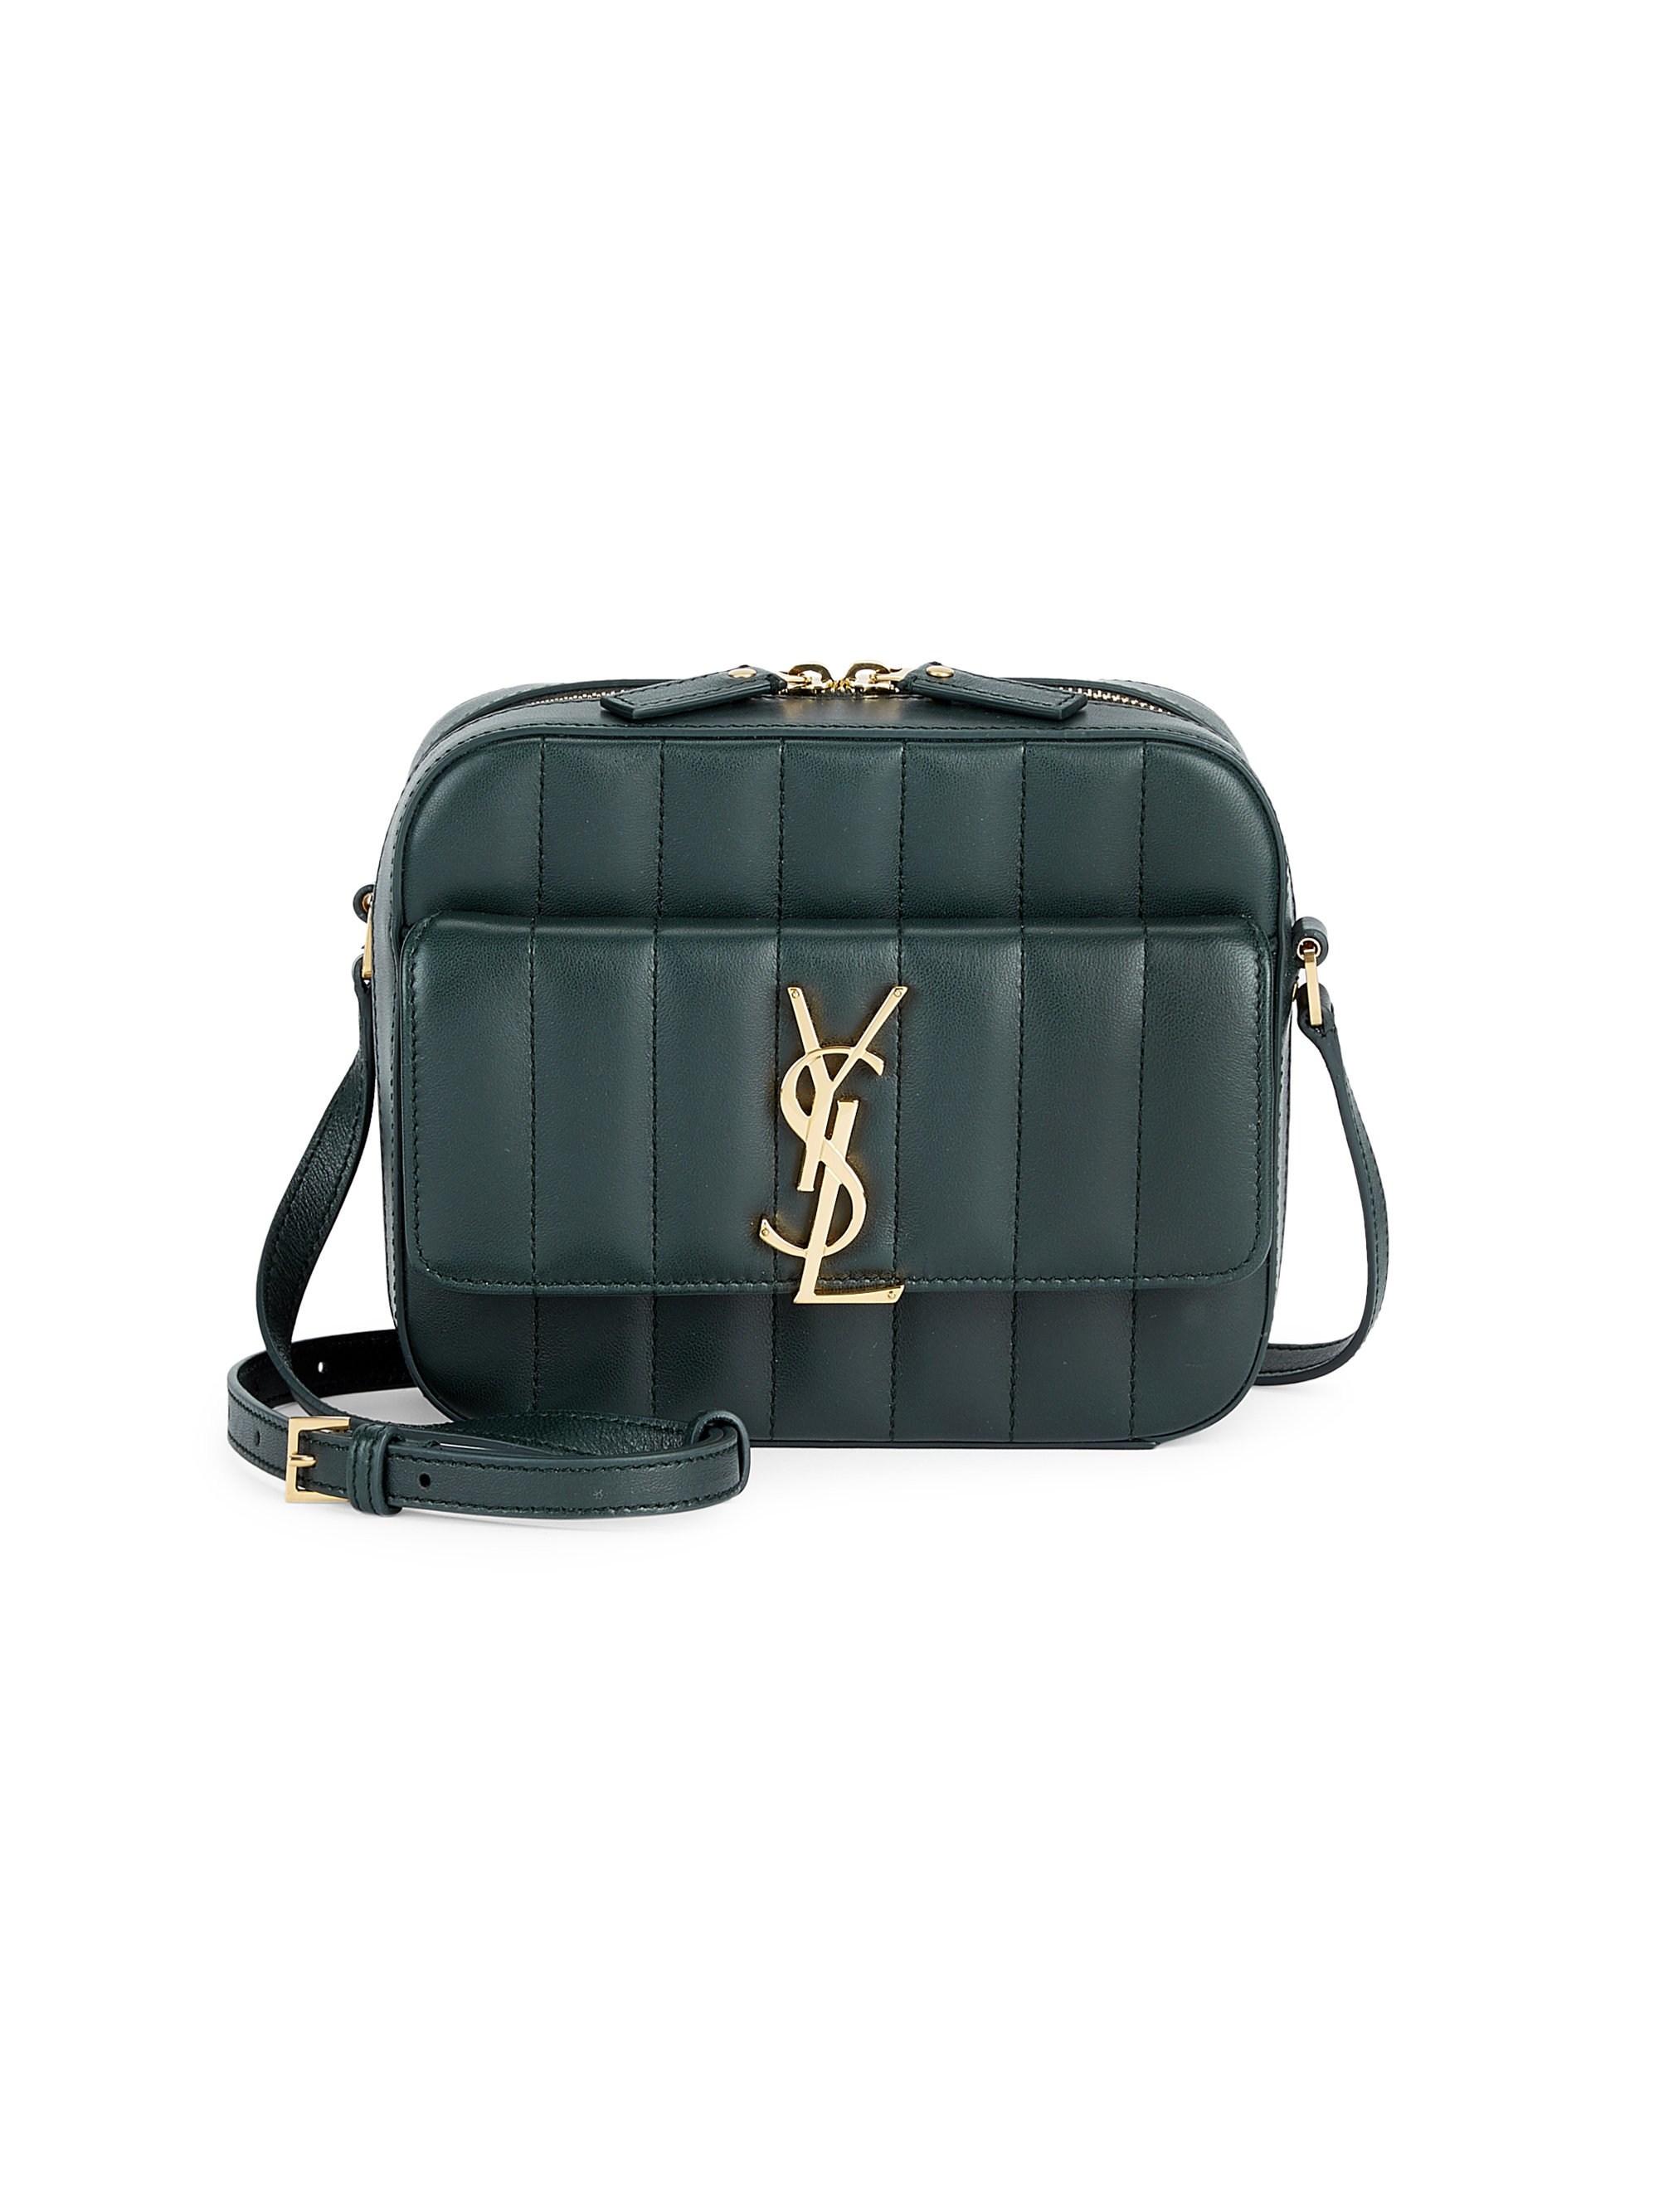 Saint Laurent Vicky Matelassé Leather Camera Bag in Green - Lyst